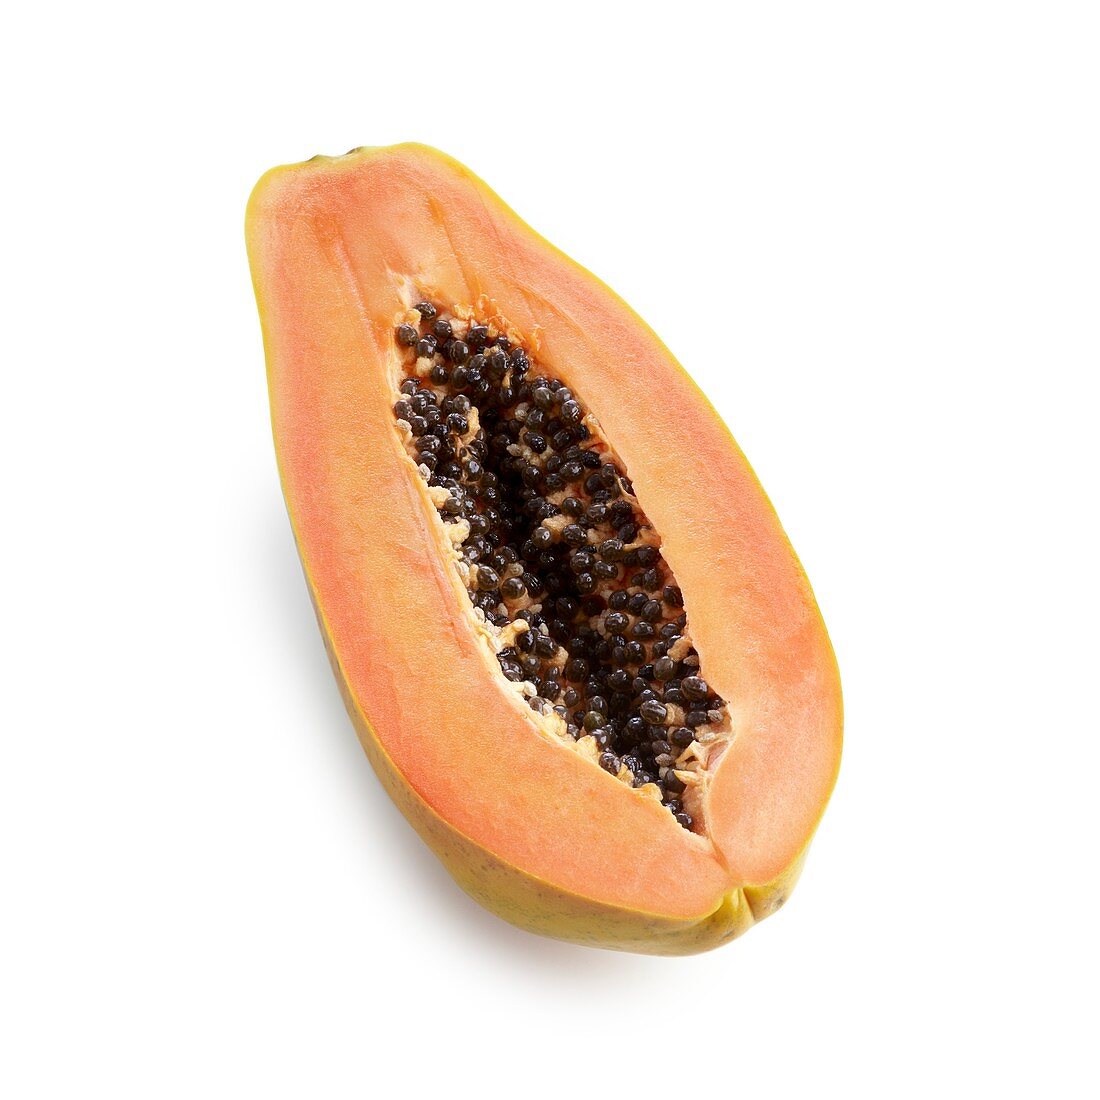 half a papaya